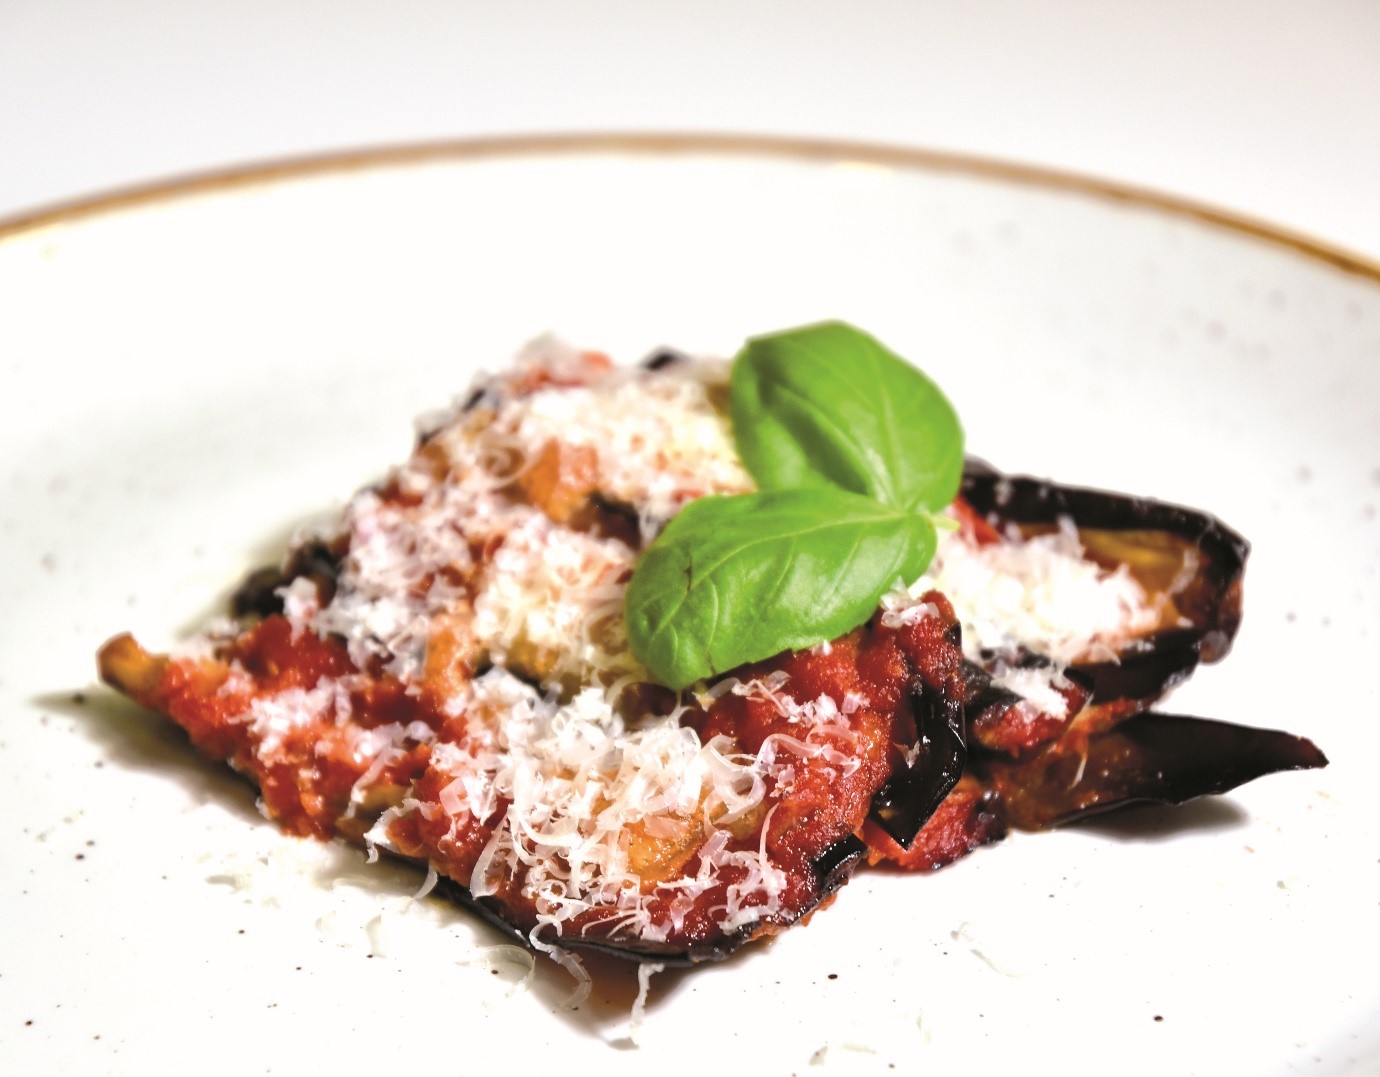 La Parmigiana – Baked aubergine layered with tomato sauce and mozzarella